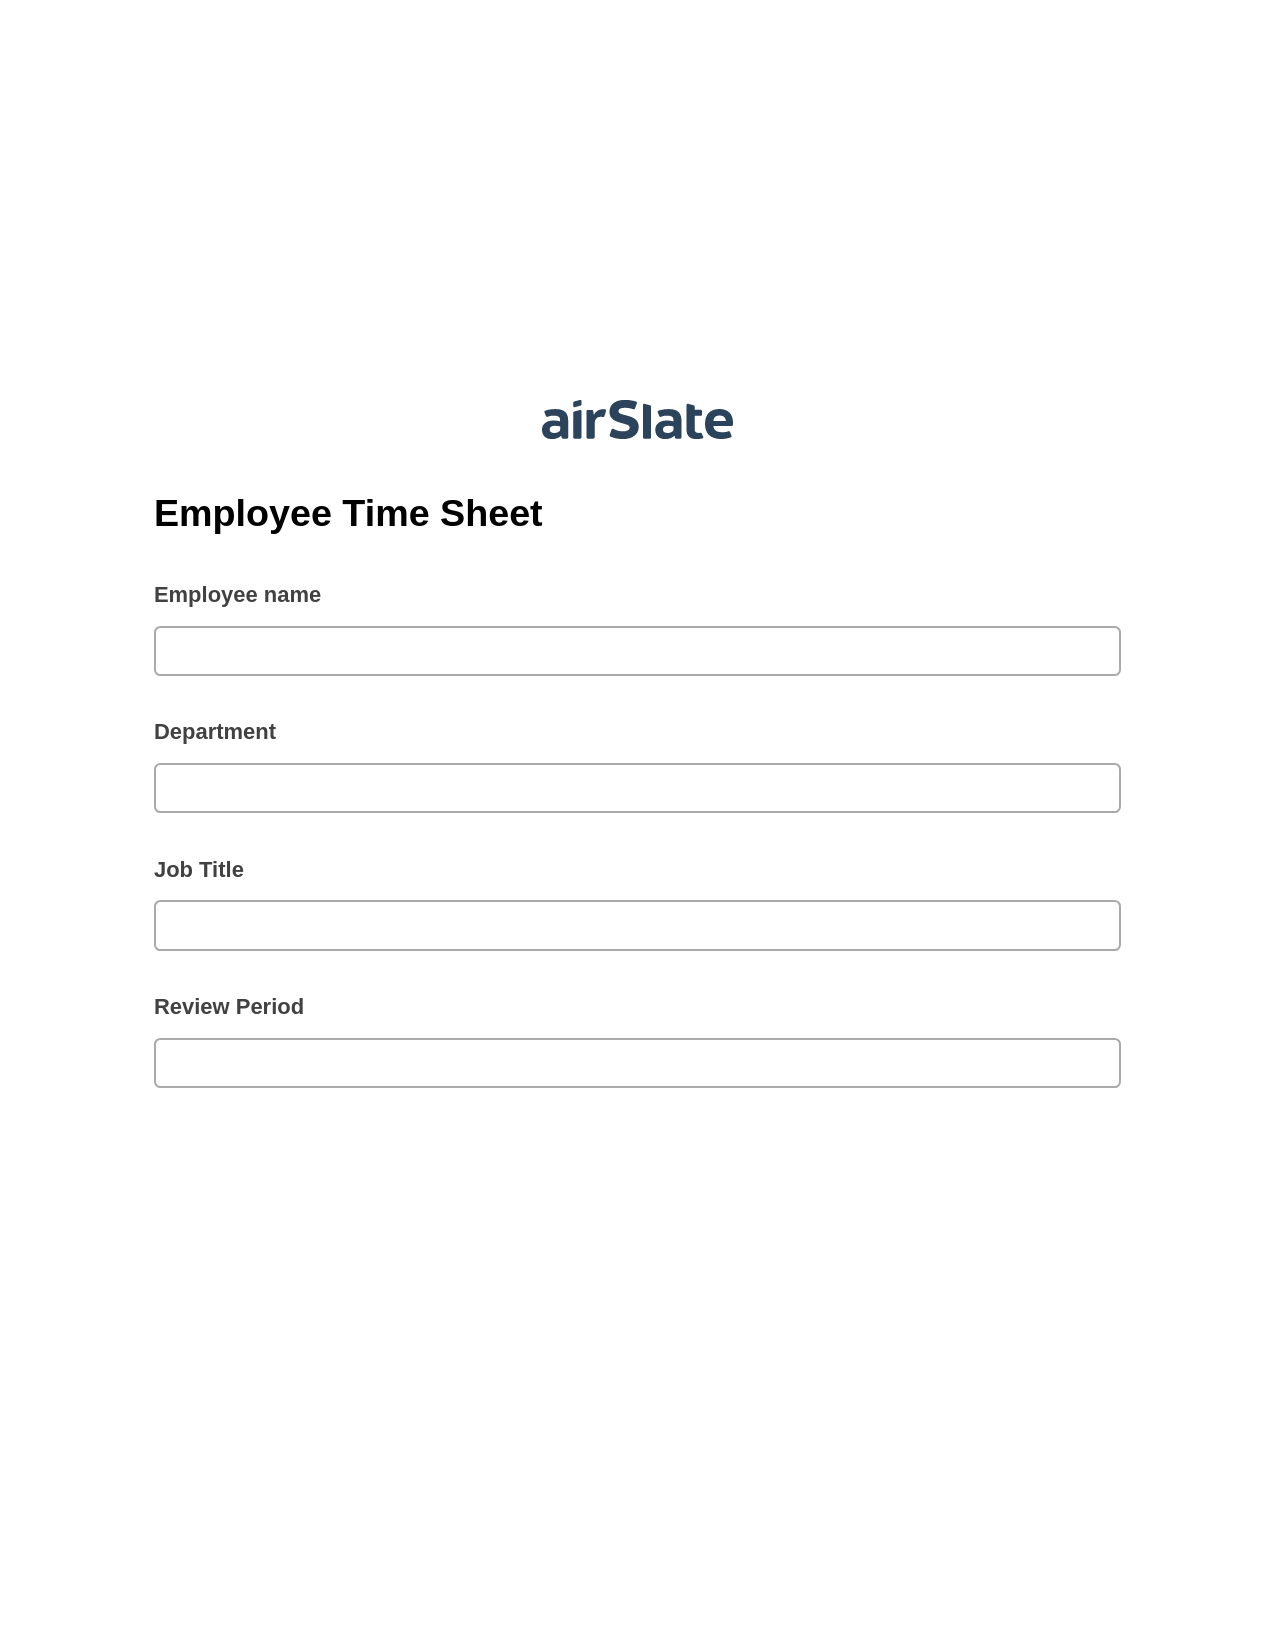 Multirole Employee Time Sheet Pre-fill Document Bot, Create Salesforce Records Bot, Export to Google Sheet Bot